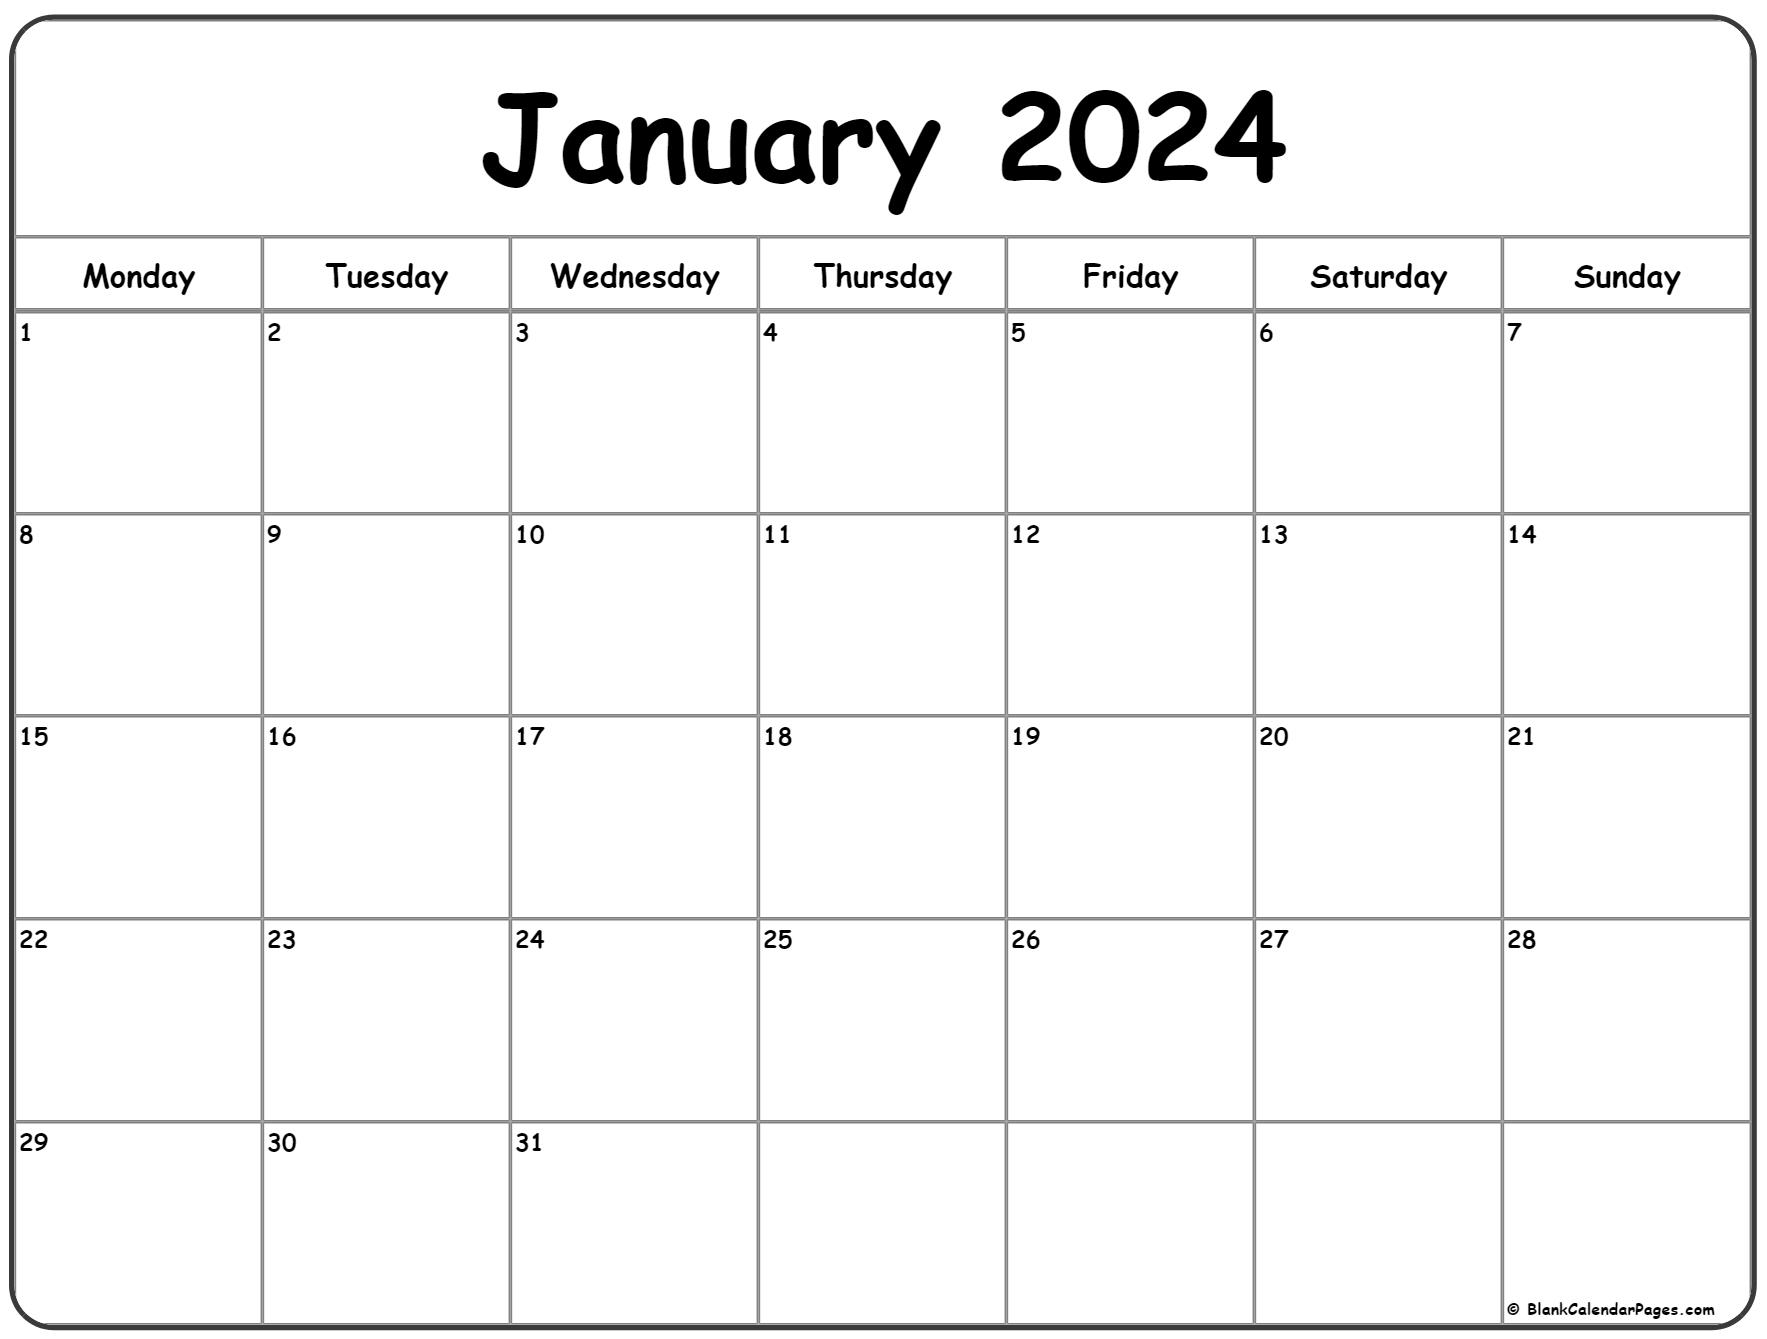 January 2024 Monday Calendar | Monday To Sunday for January 2024 Blank Calendar Printable